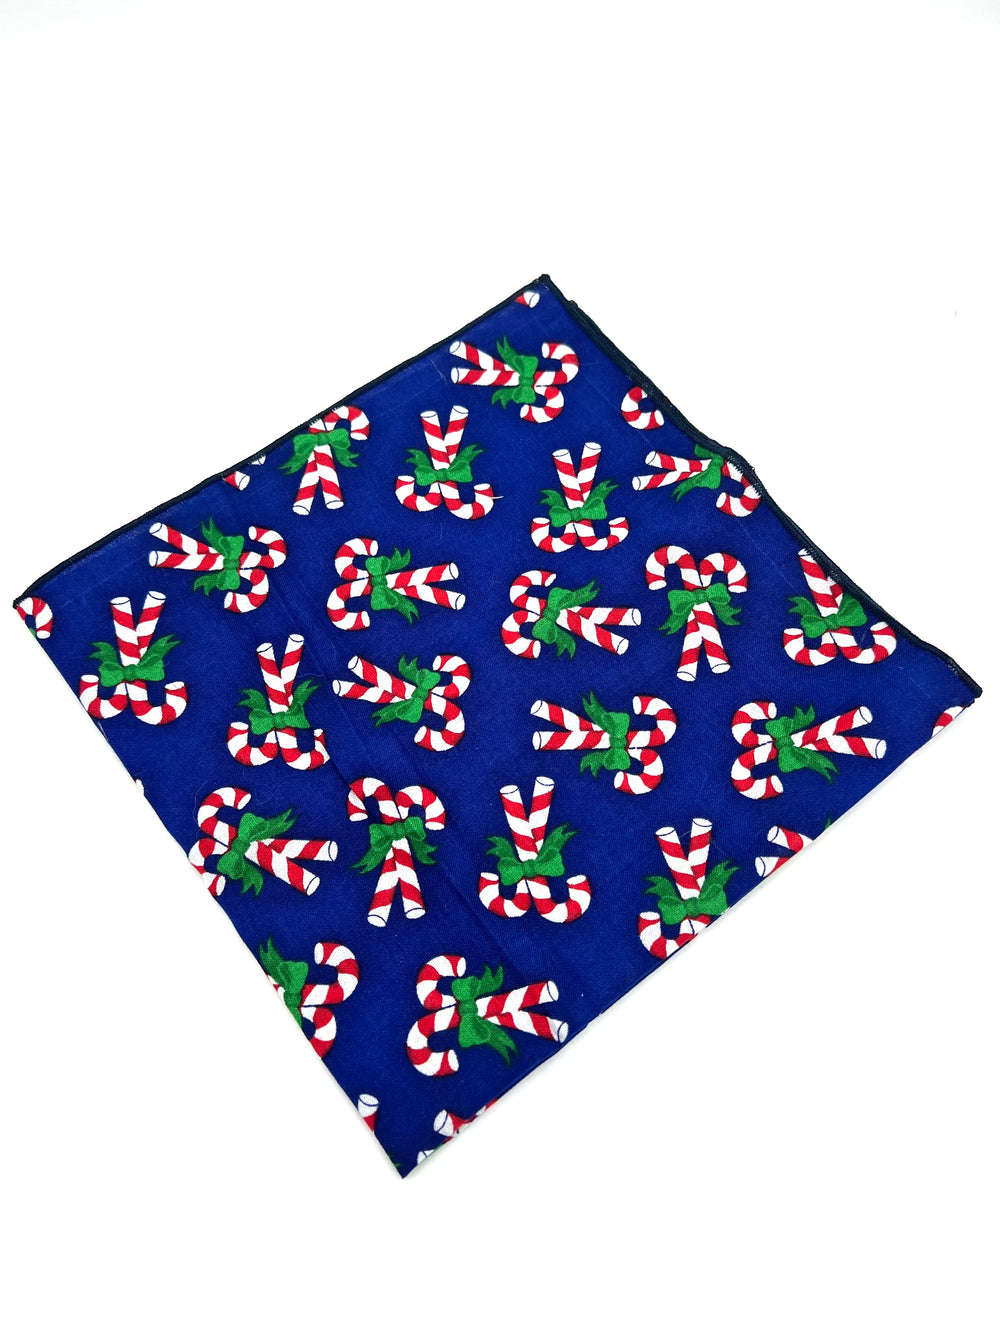 The Peppermint Handkerchief